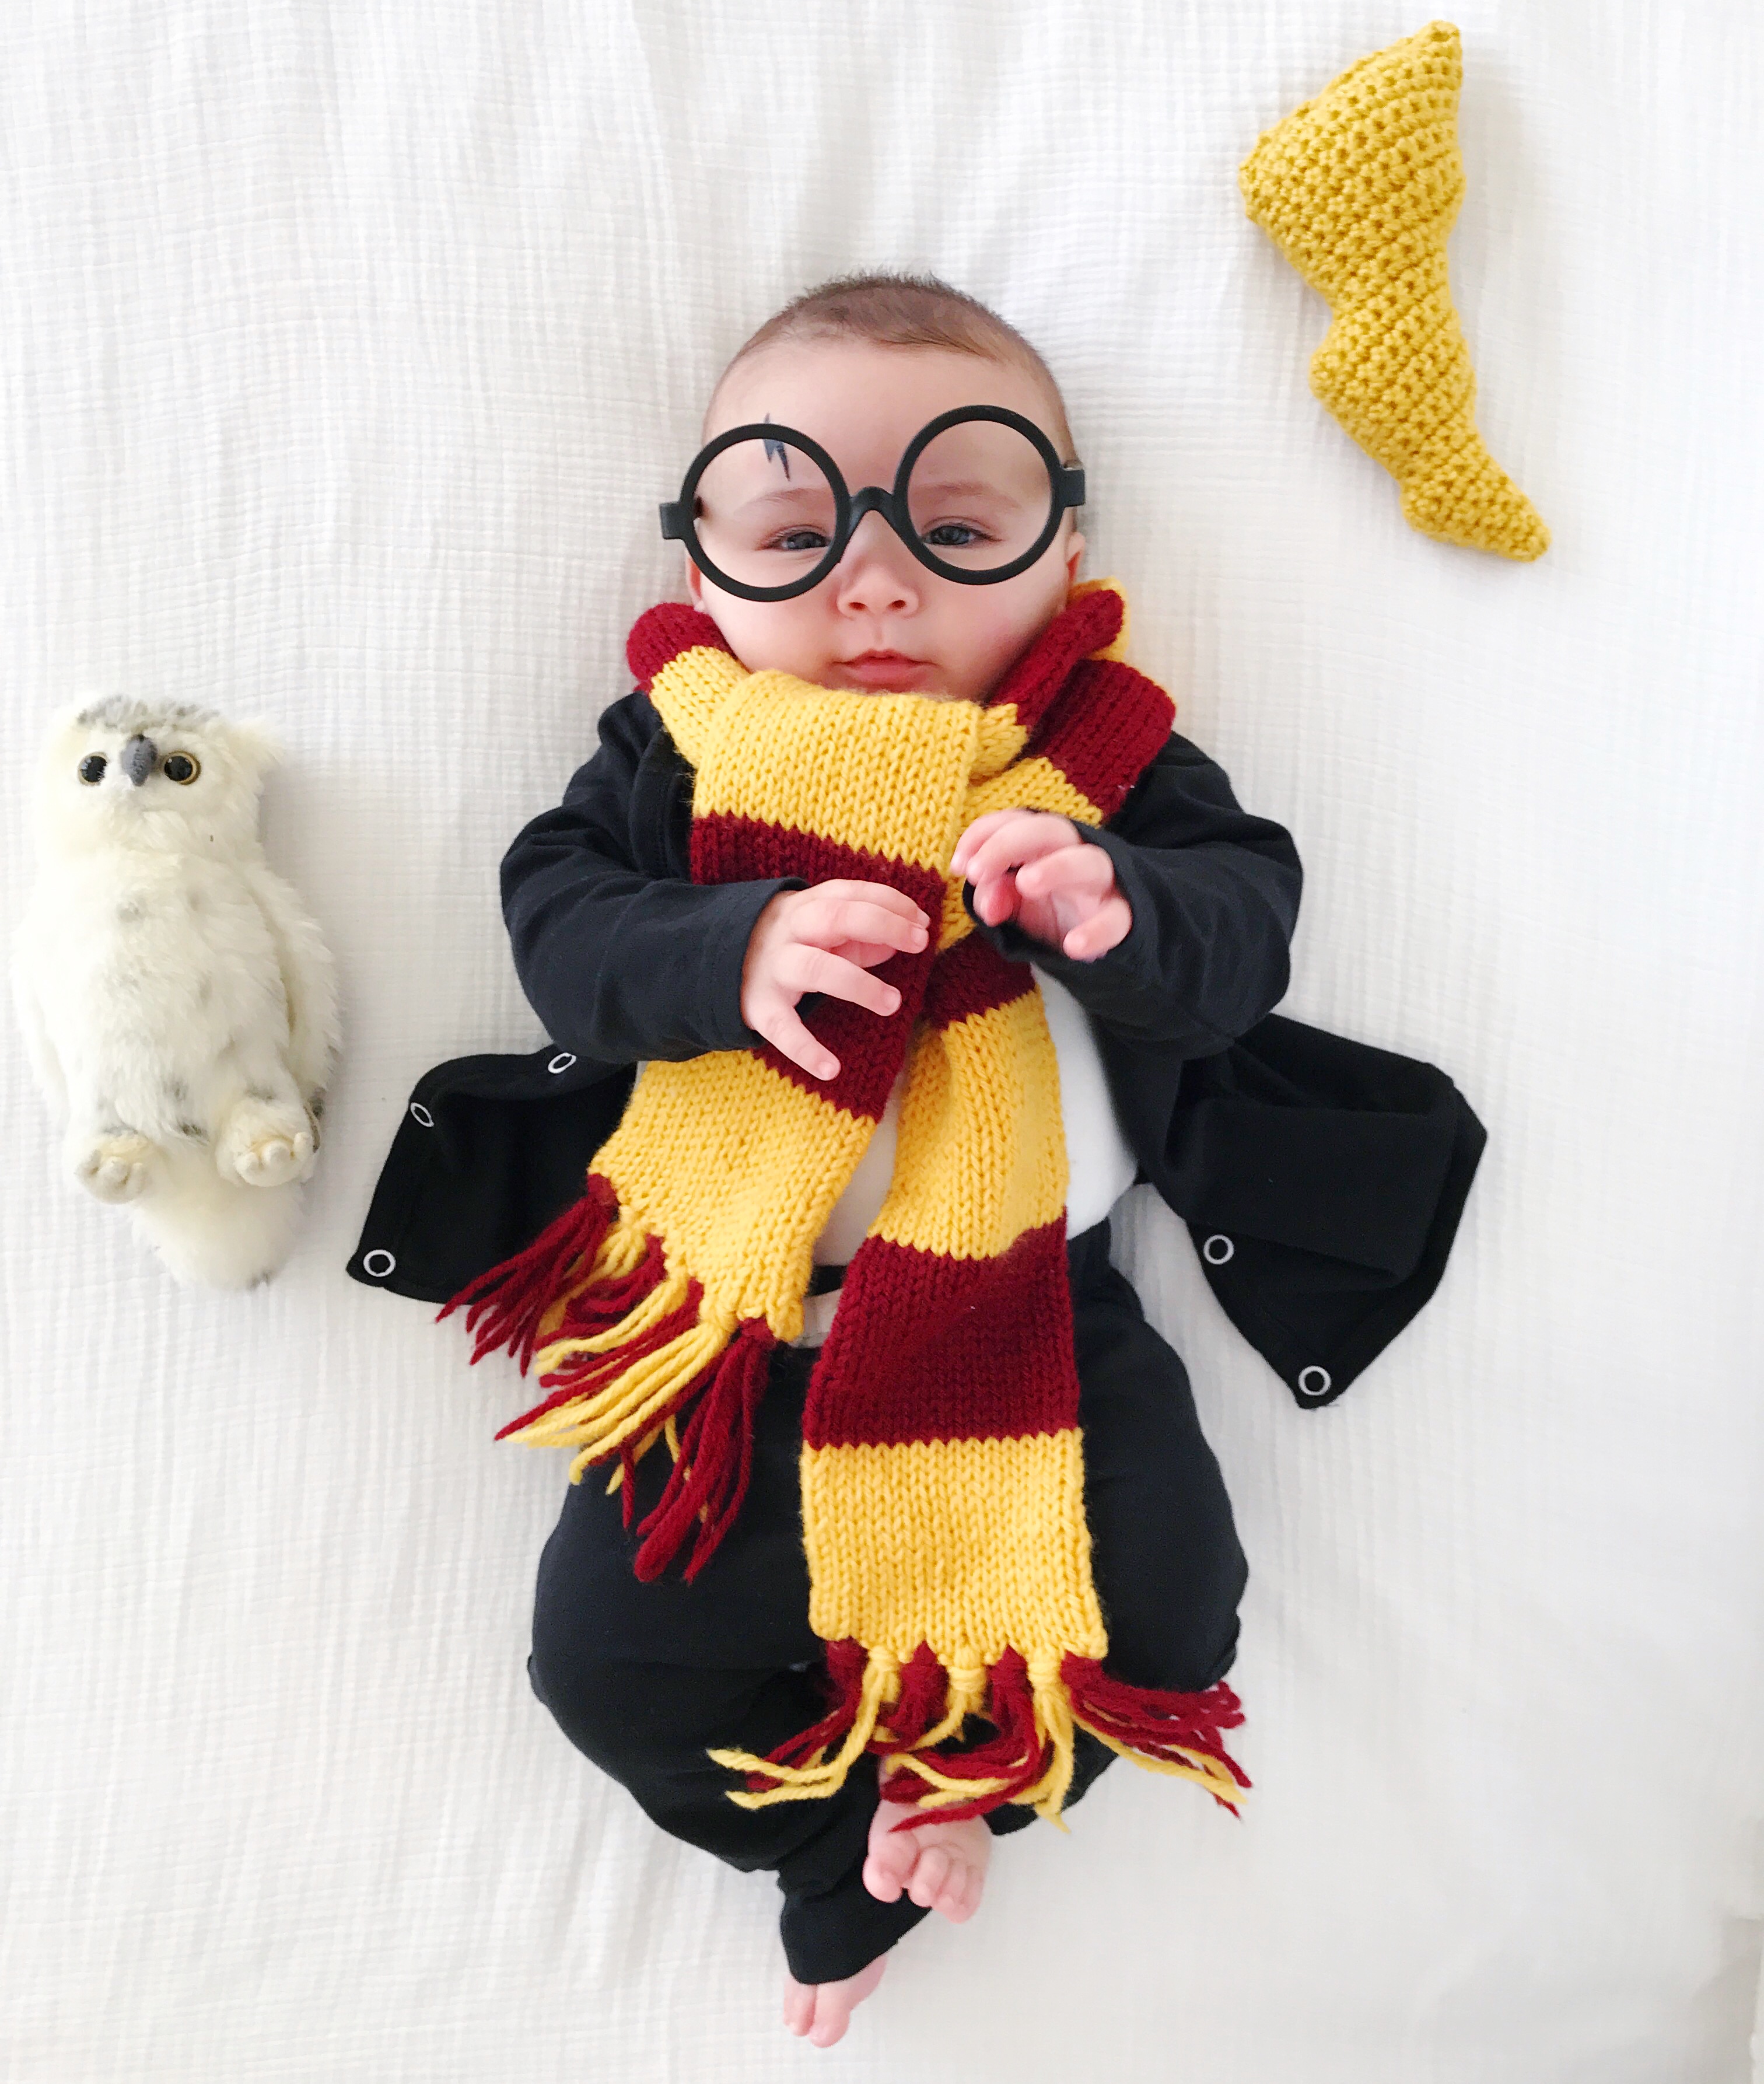 Harry Potter!  Baby harry potter costume, Harry potter baby, Harry potter  costume